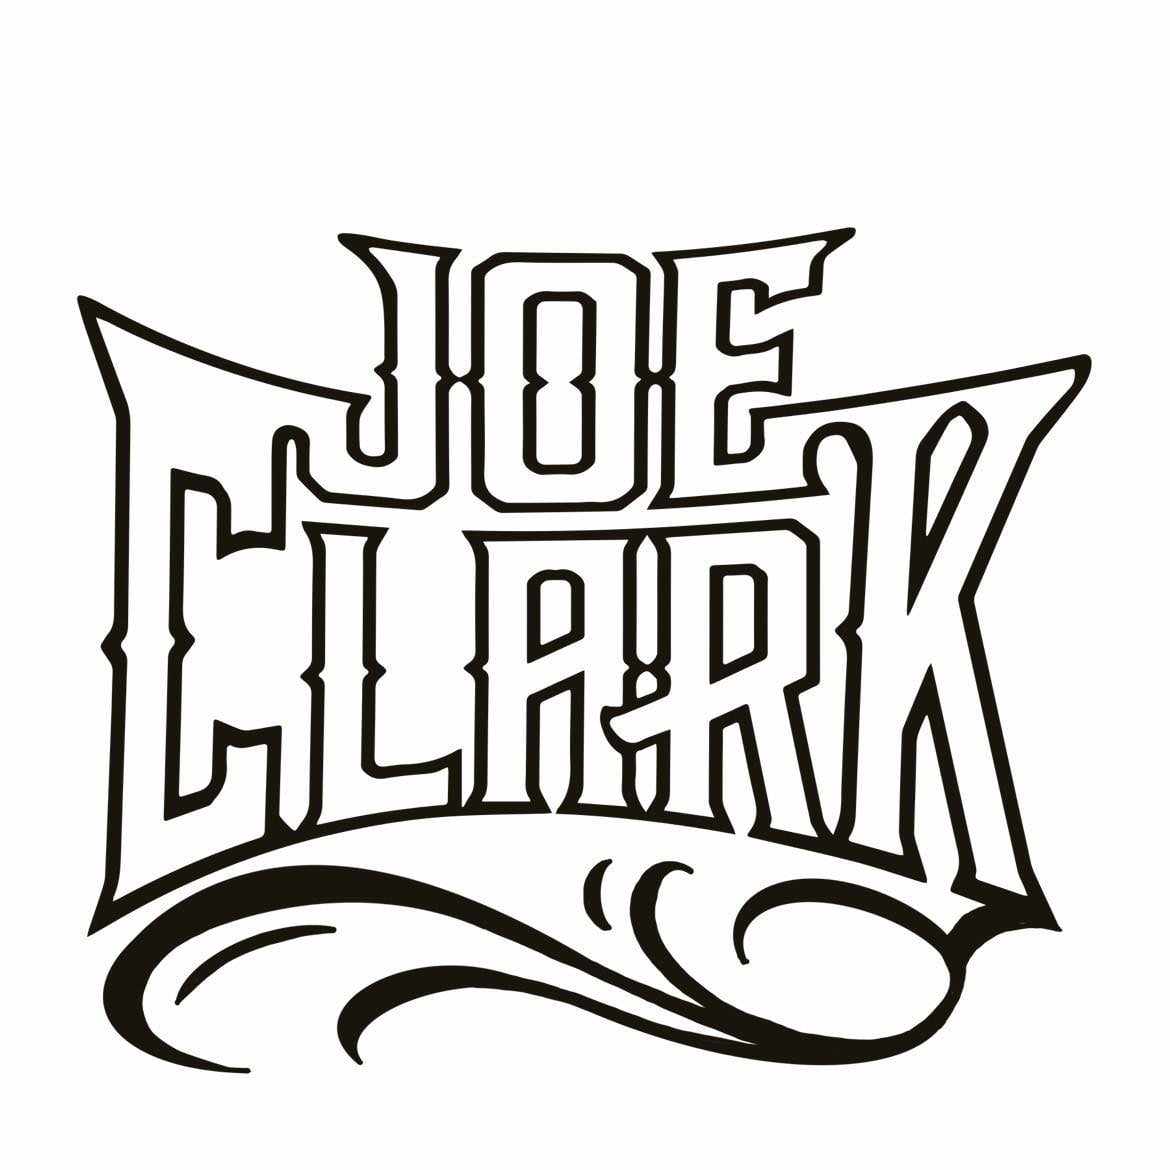 Joe Clark